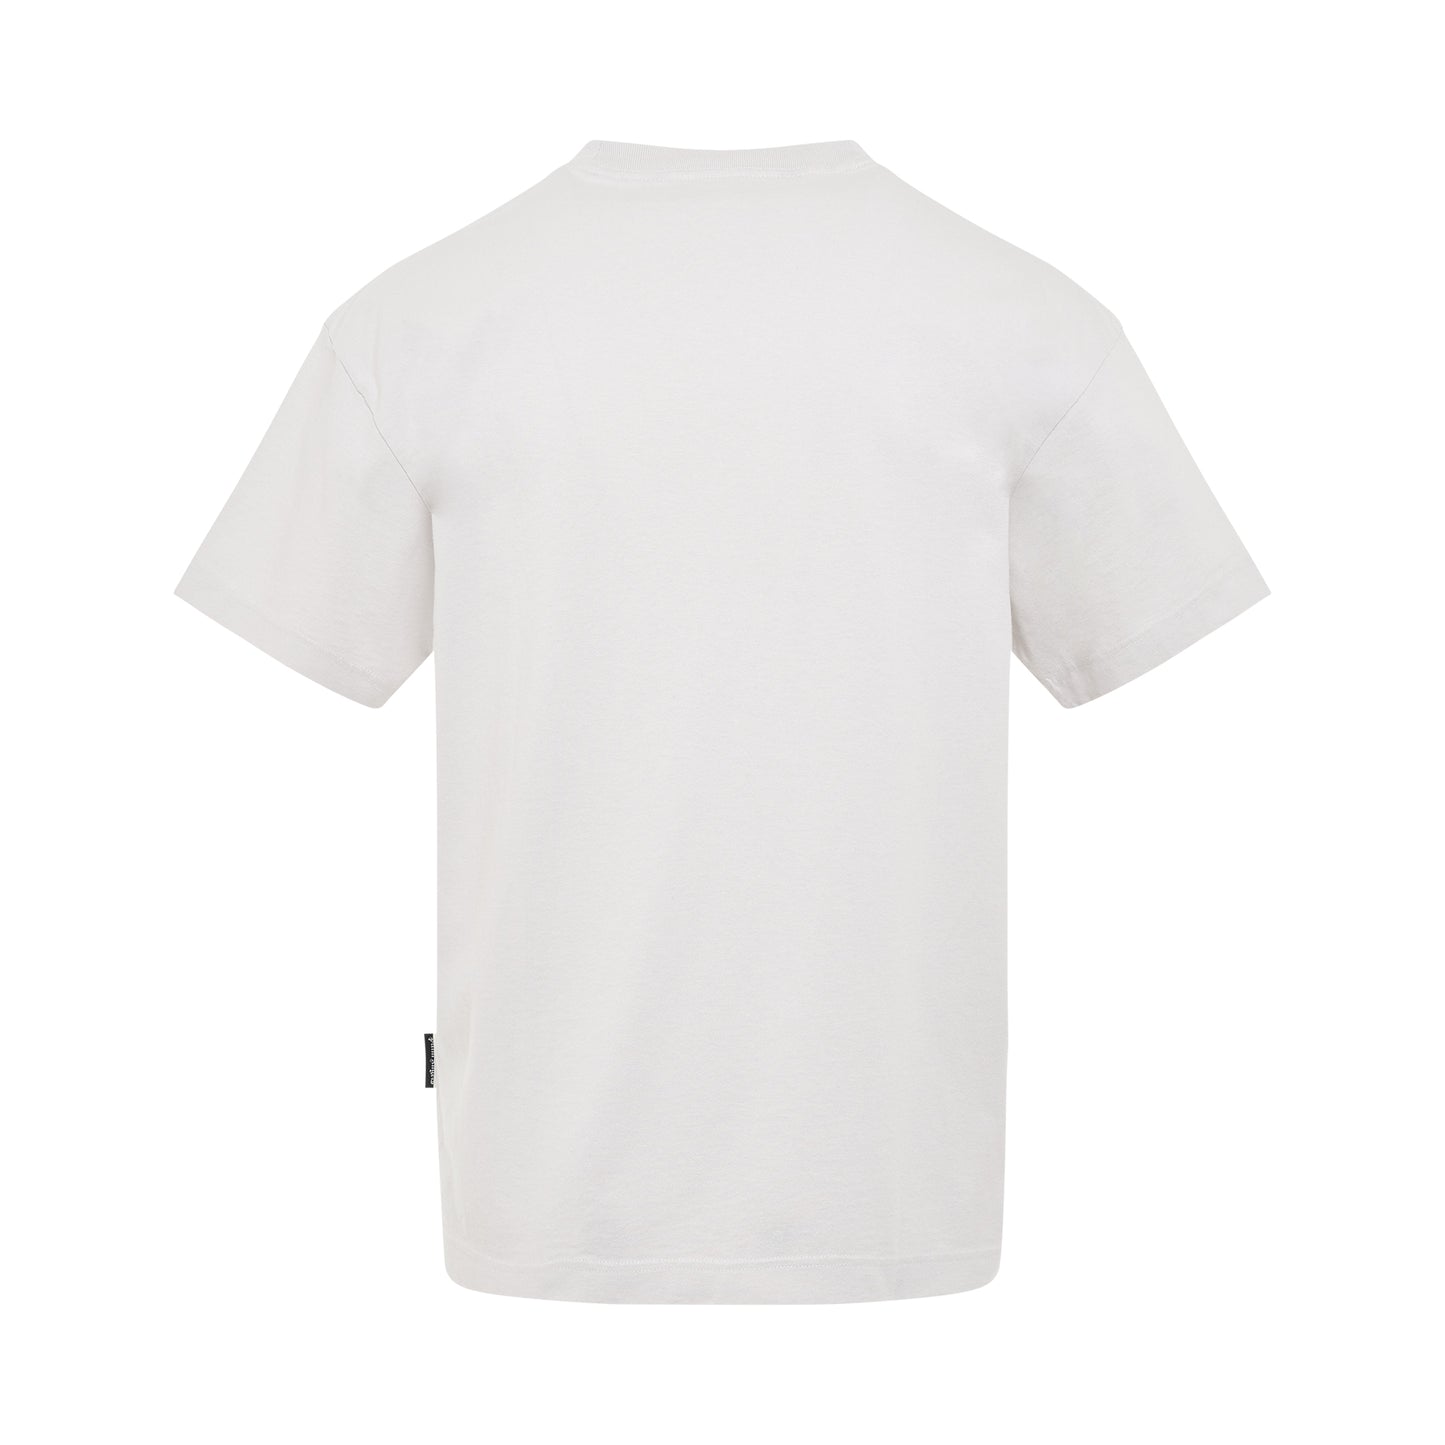 "Enzo" Logo Print T-Shirt in Light Grey/Orange